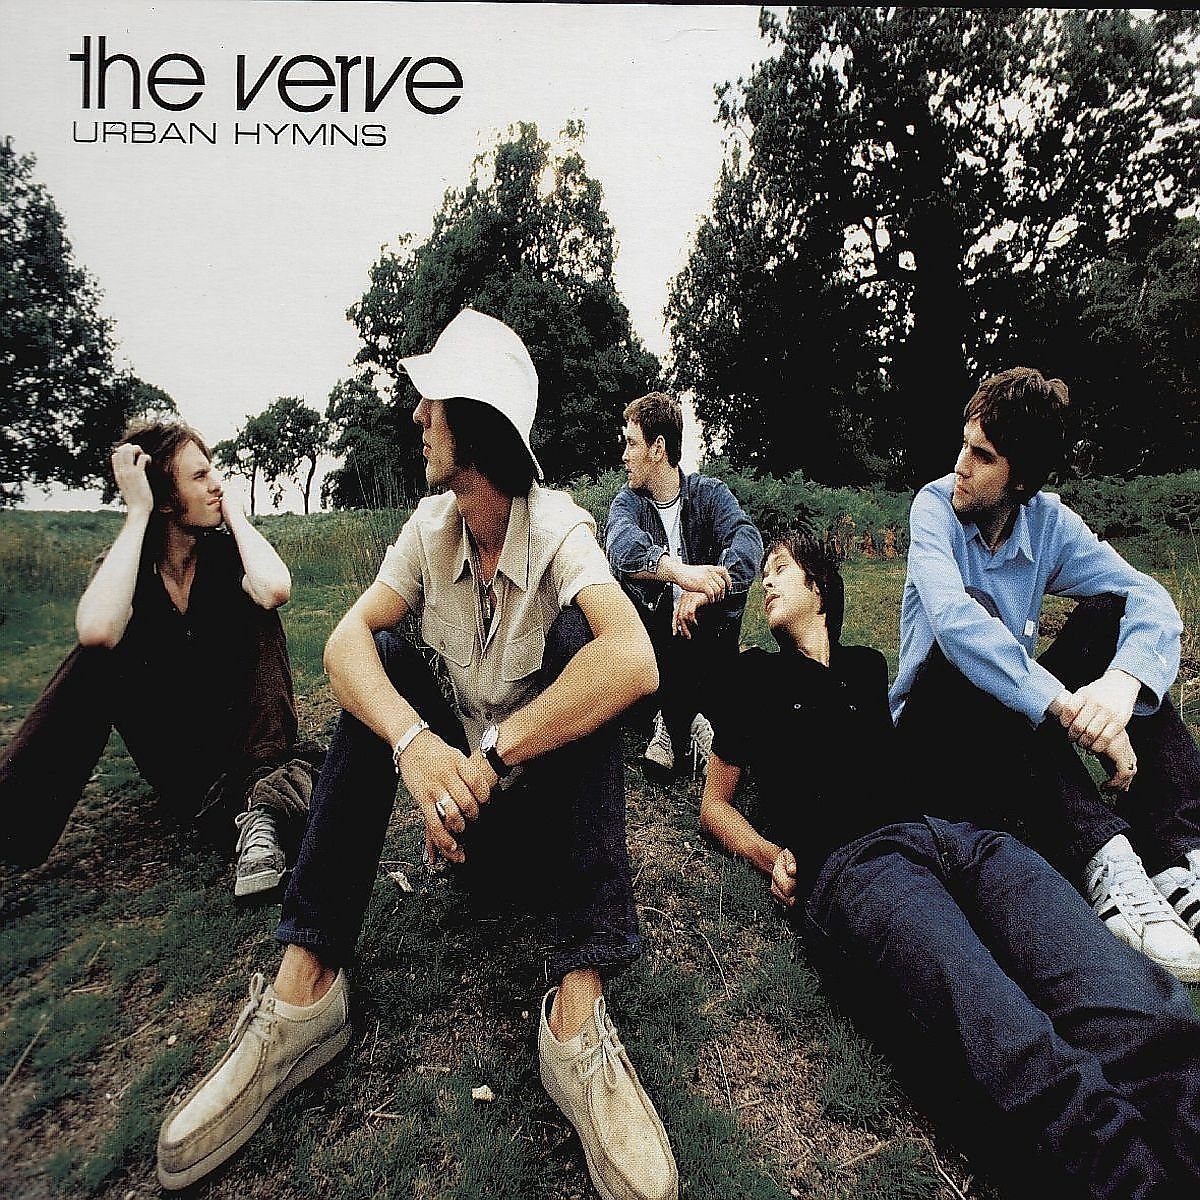 The Verve - Urban Hymns (Deluxe 20th Anniversary Edition) (Virgin/UMC)